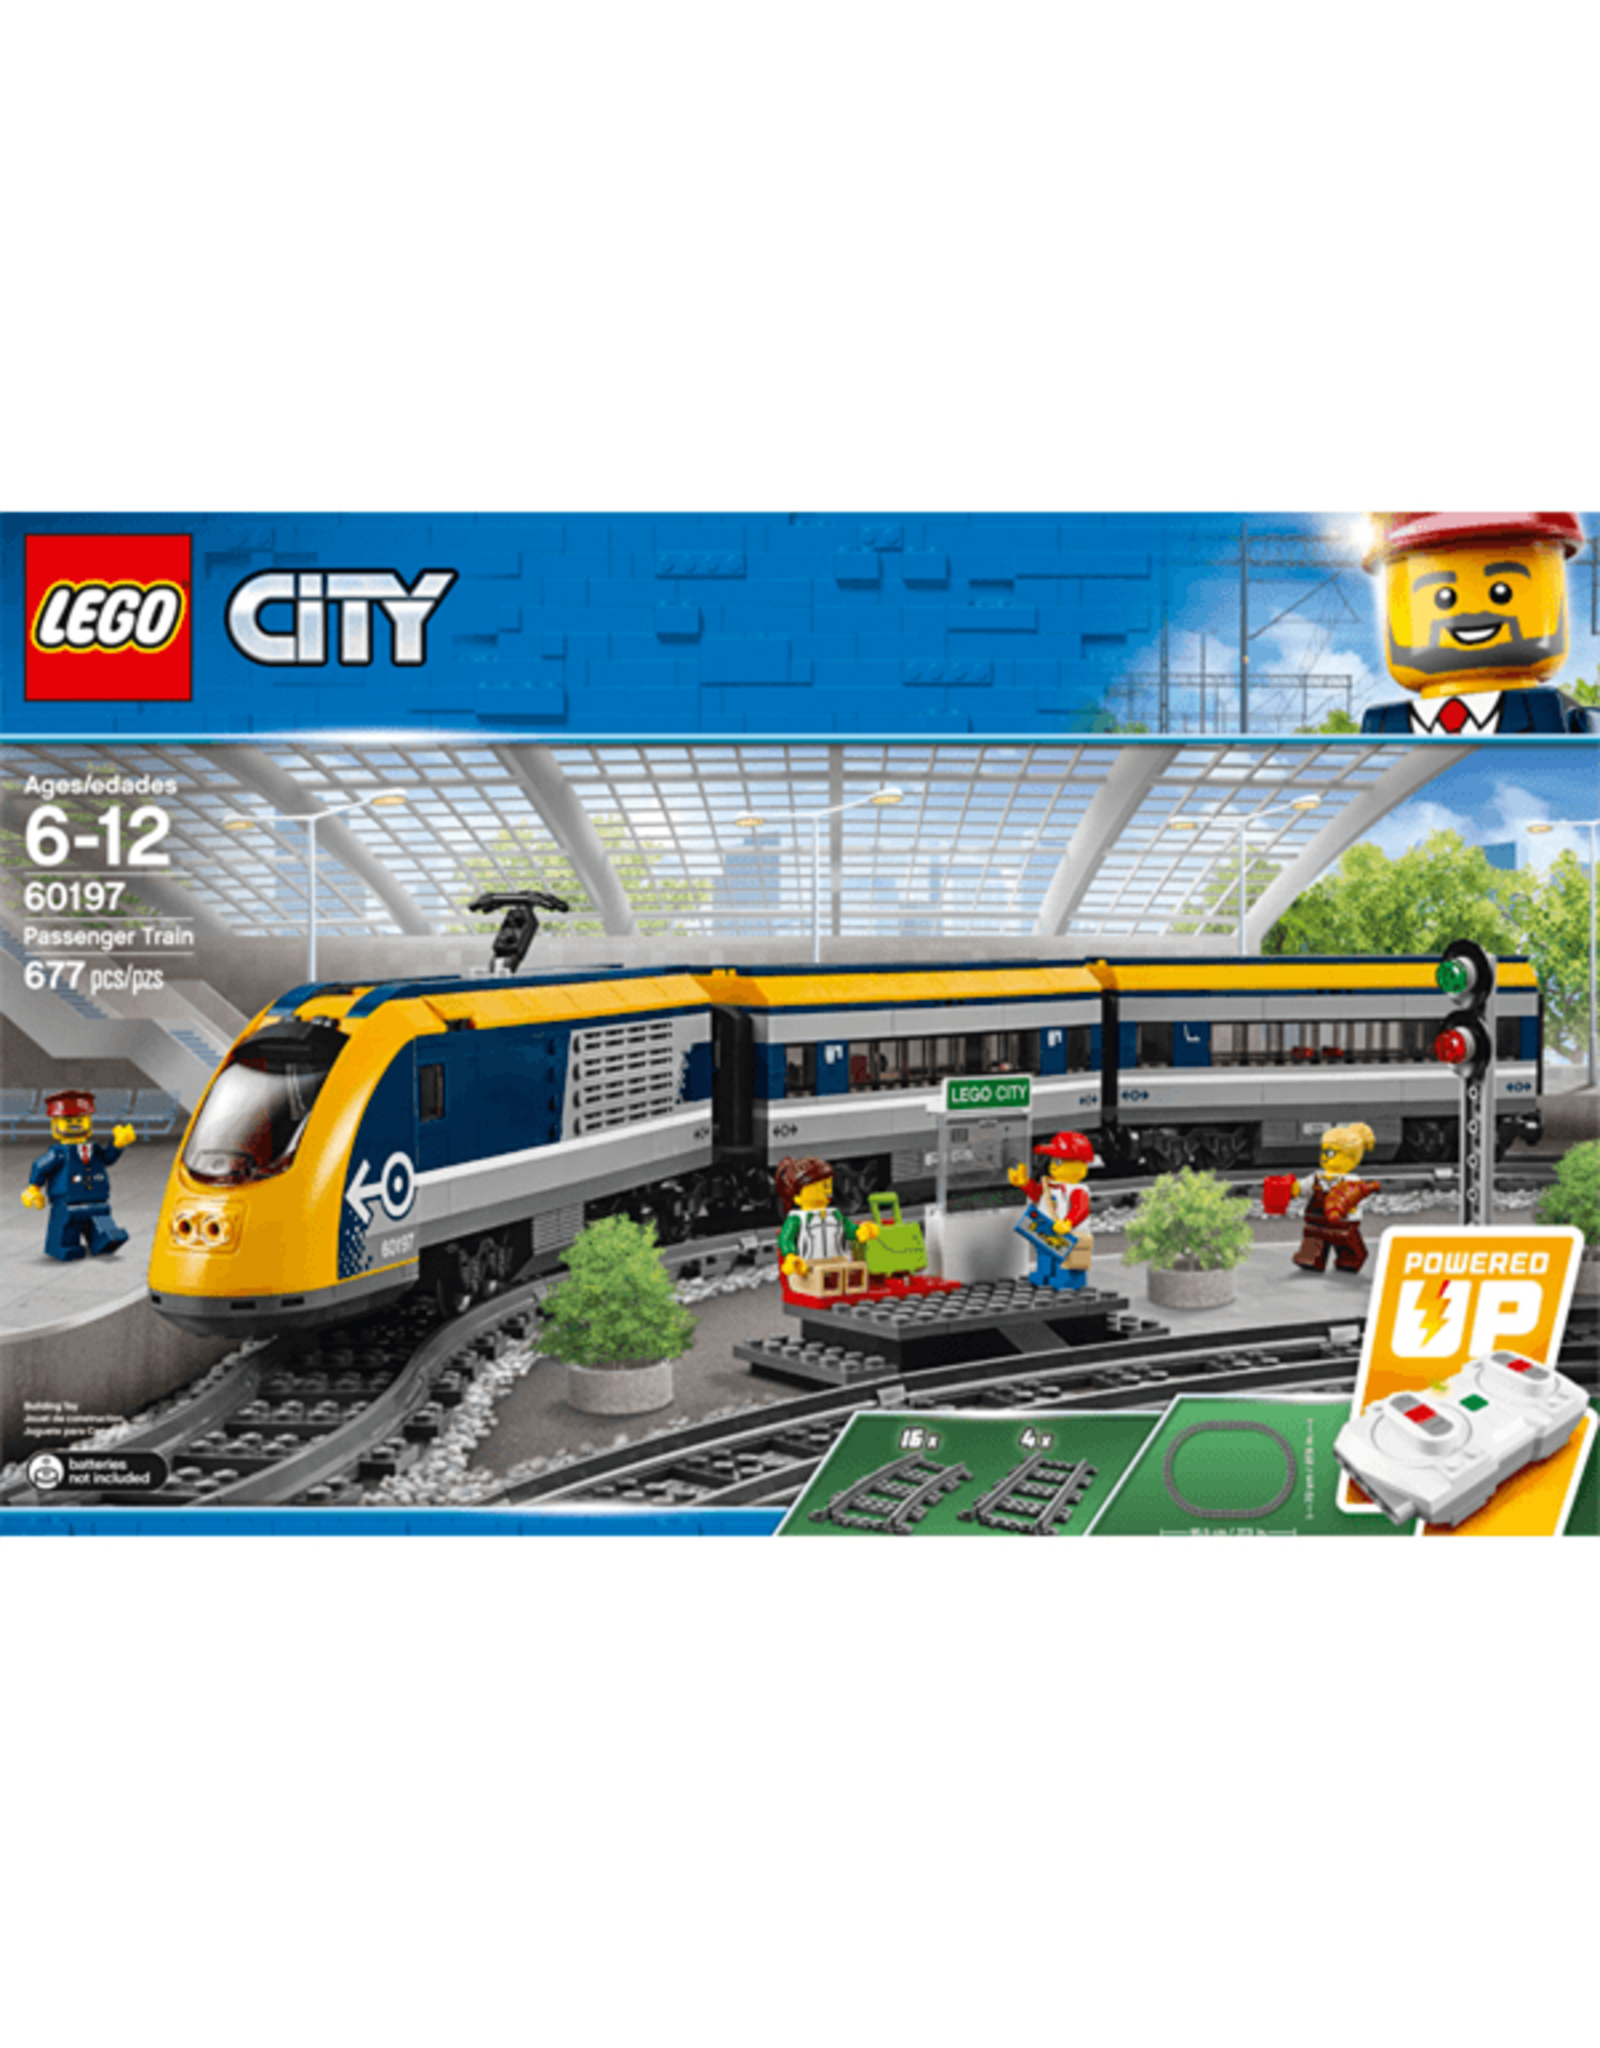 LEGO City 60197 Passenger Train